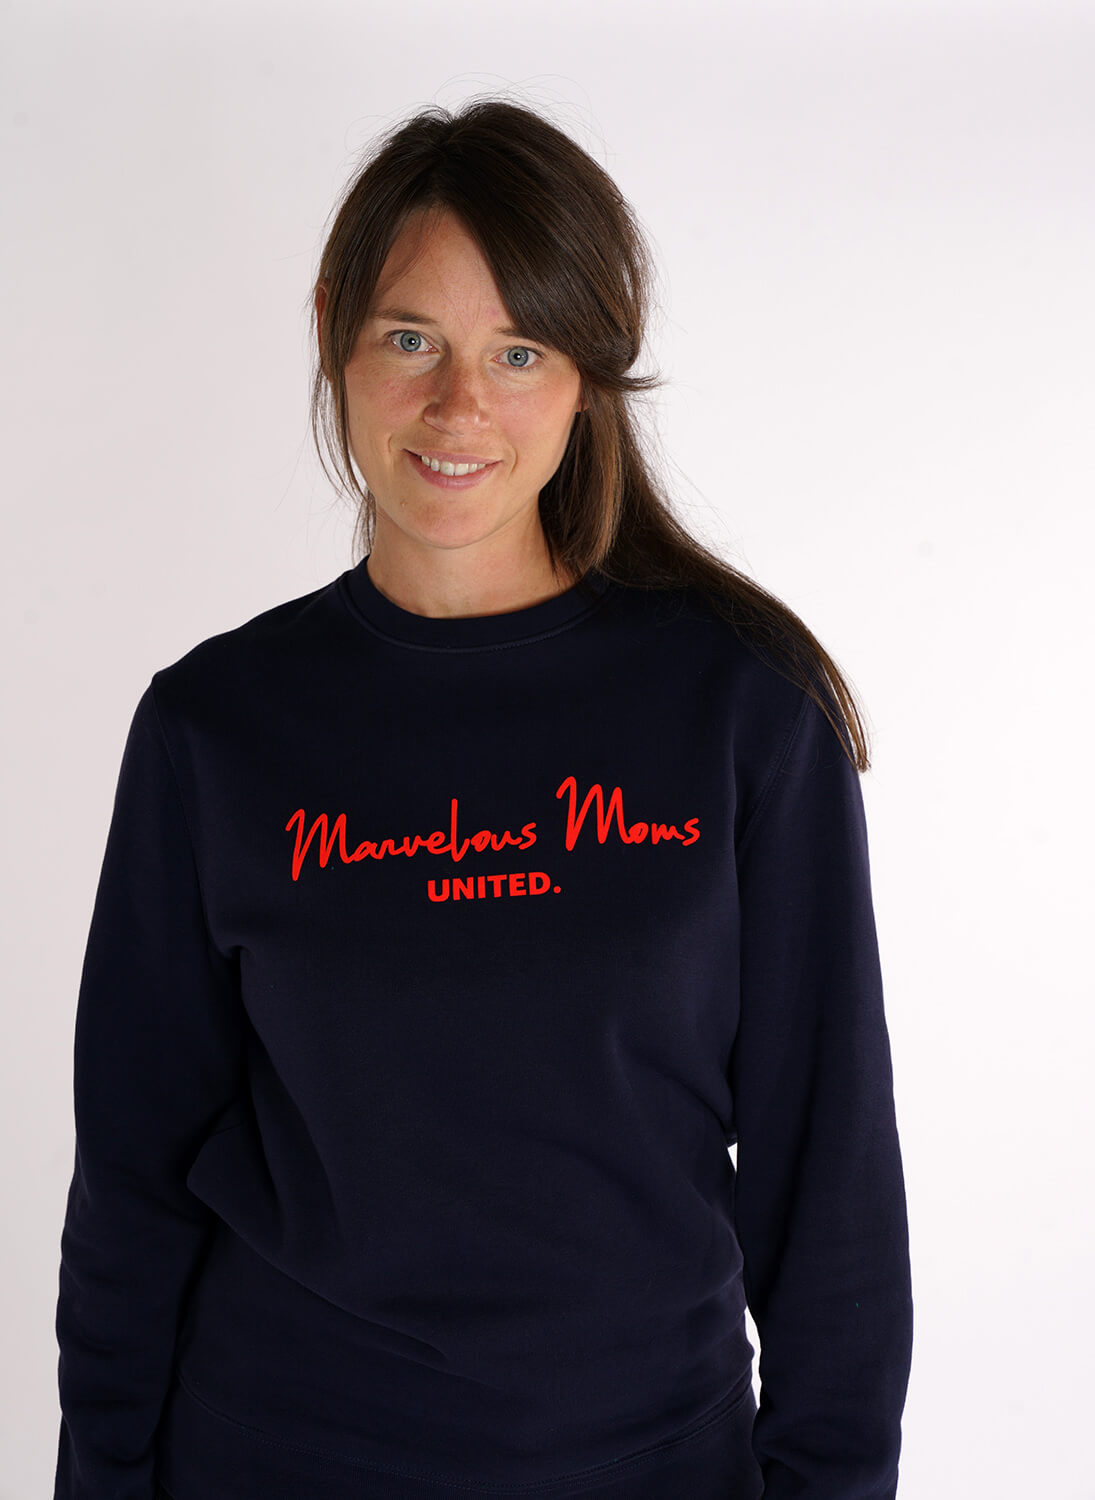 Marvelous moms united sweater van Mangos on Monday